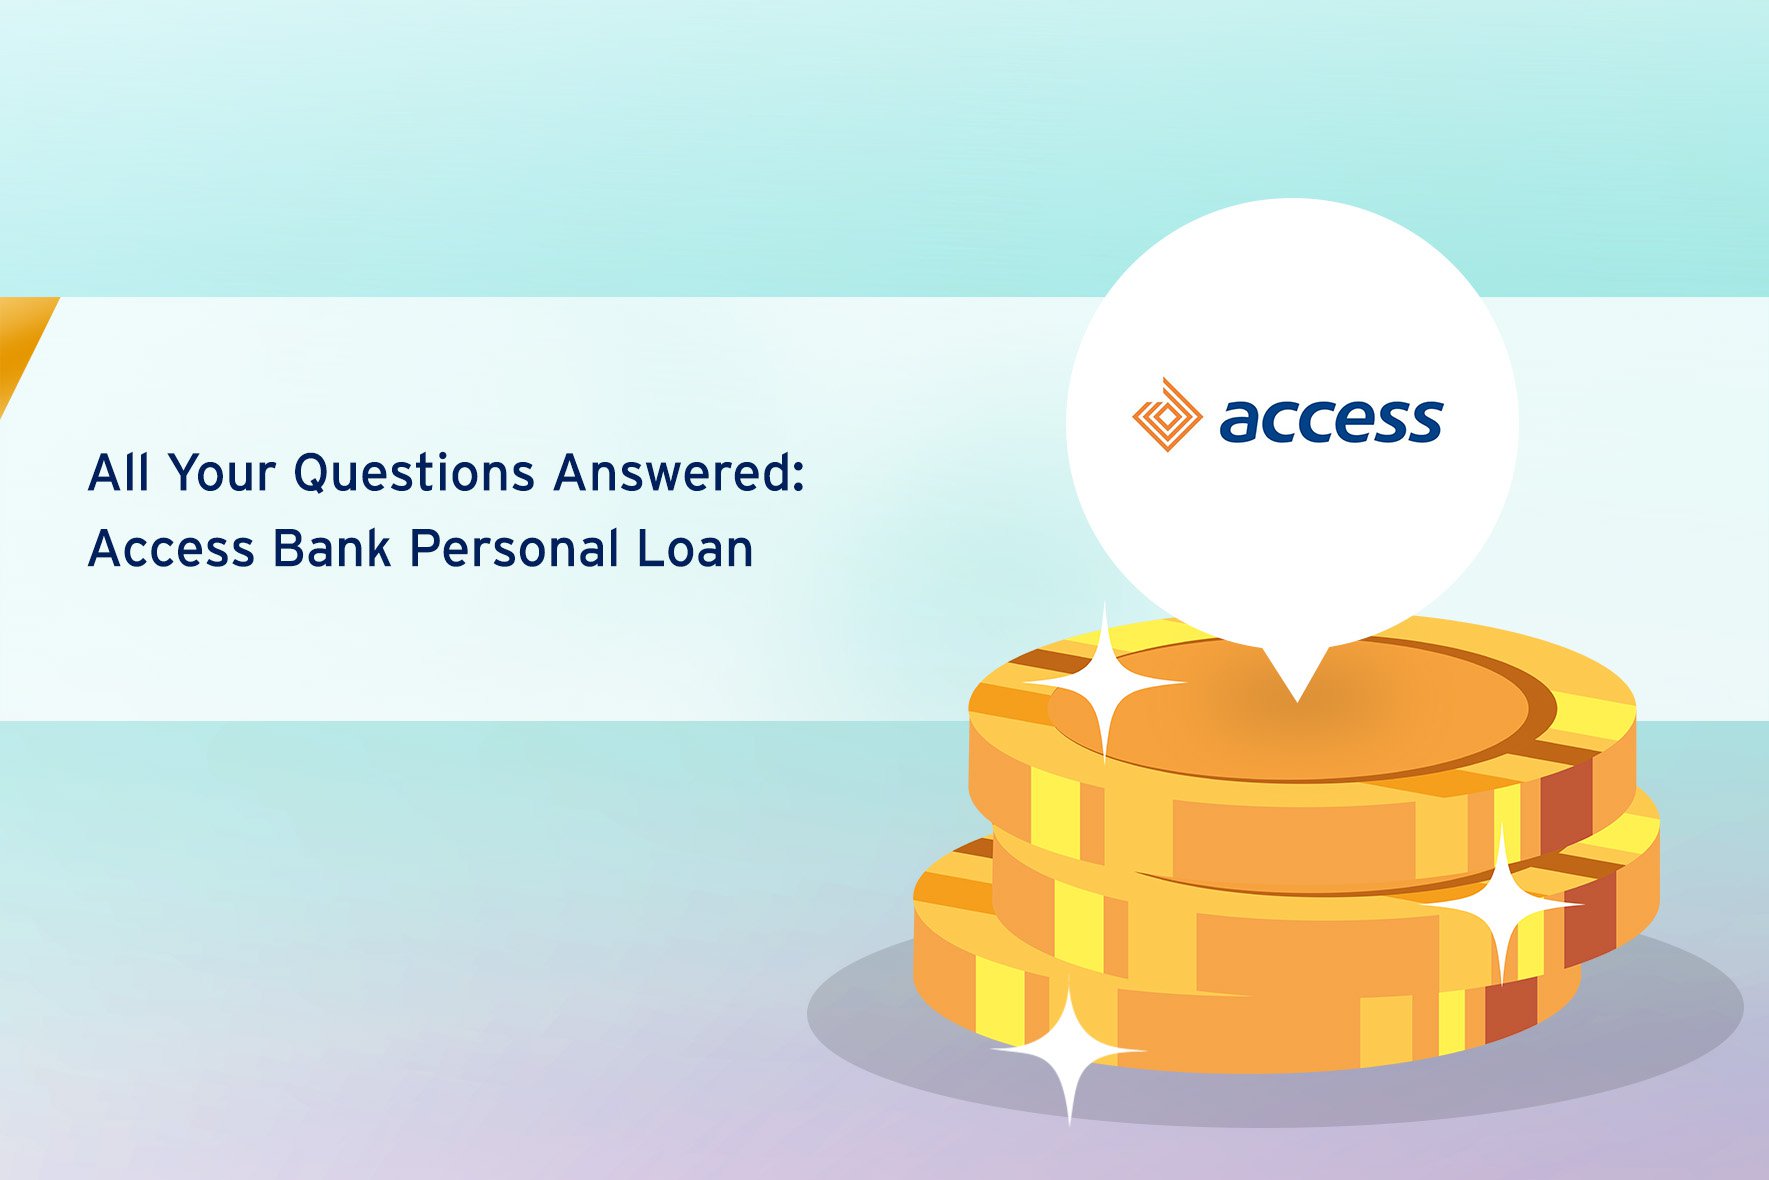 Access Bank Personal Loan